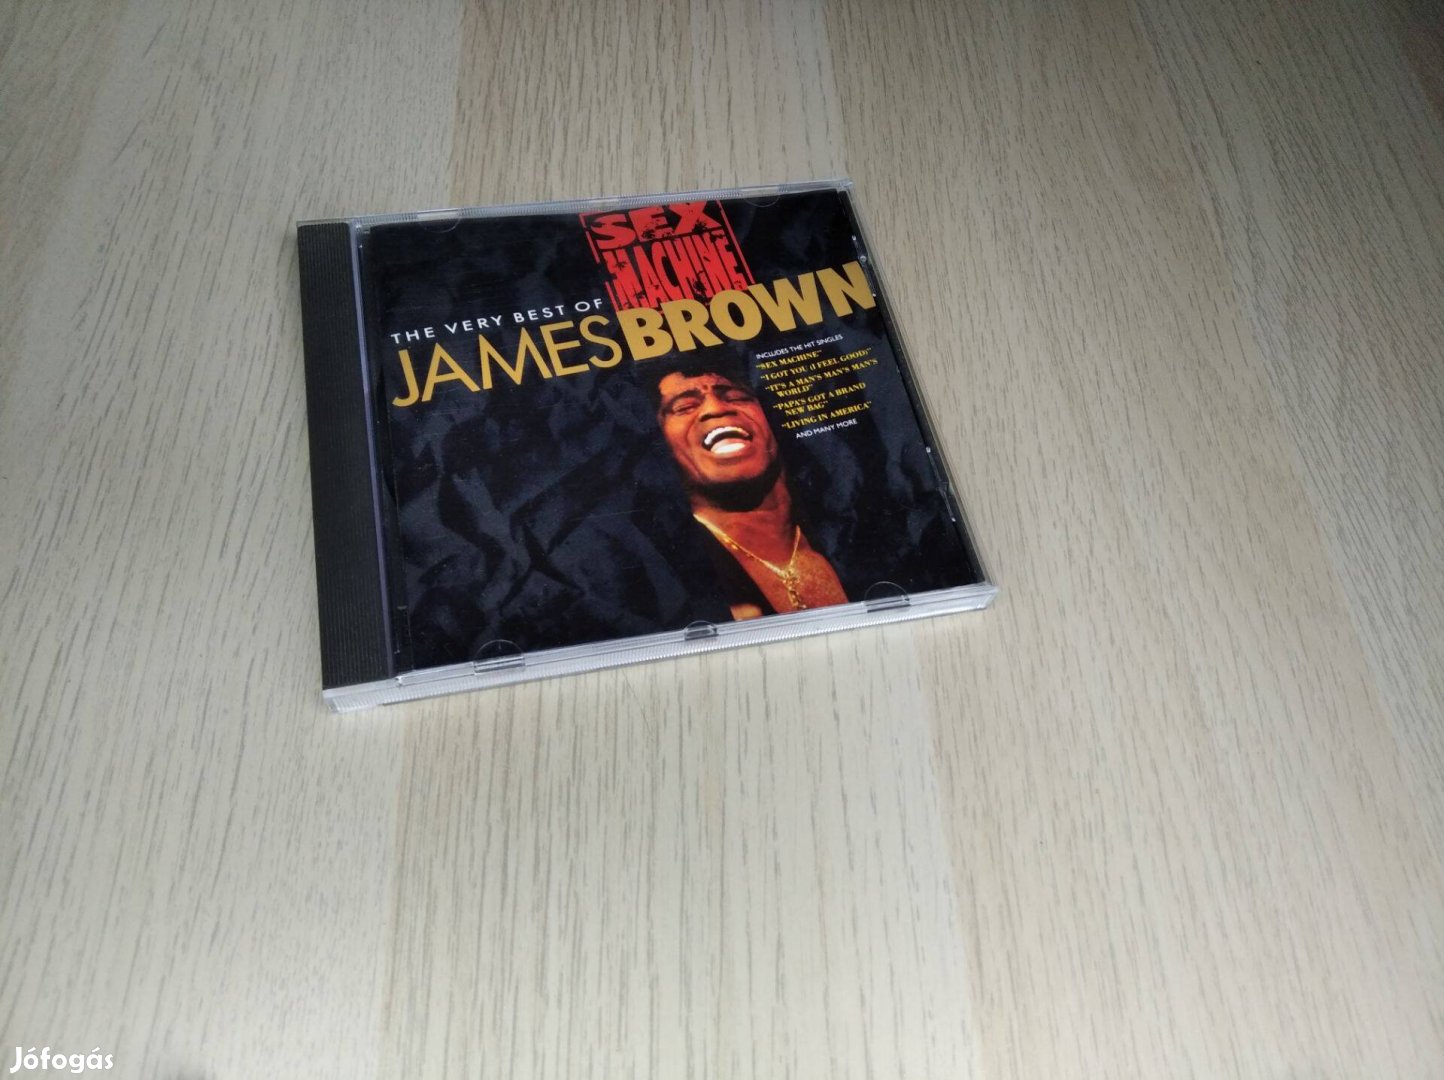 James Brown - Sex Machine: The Very Best Of James Brown / CD